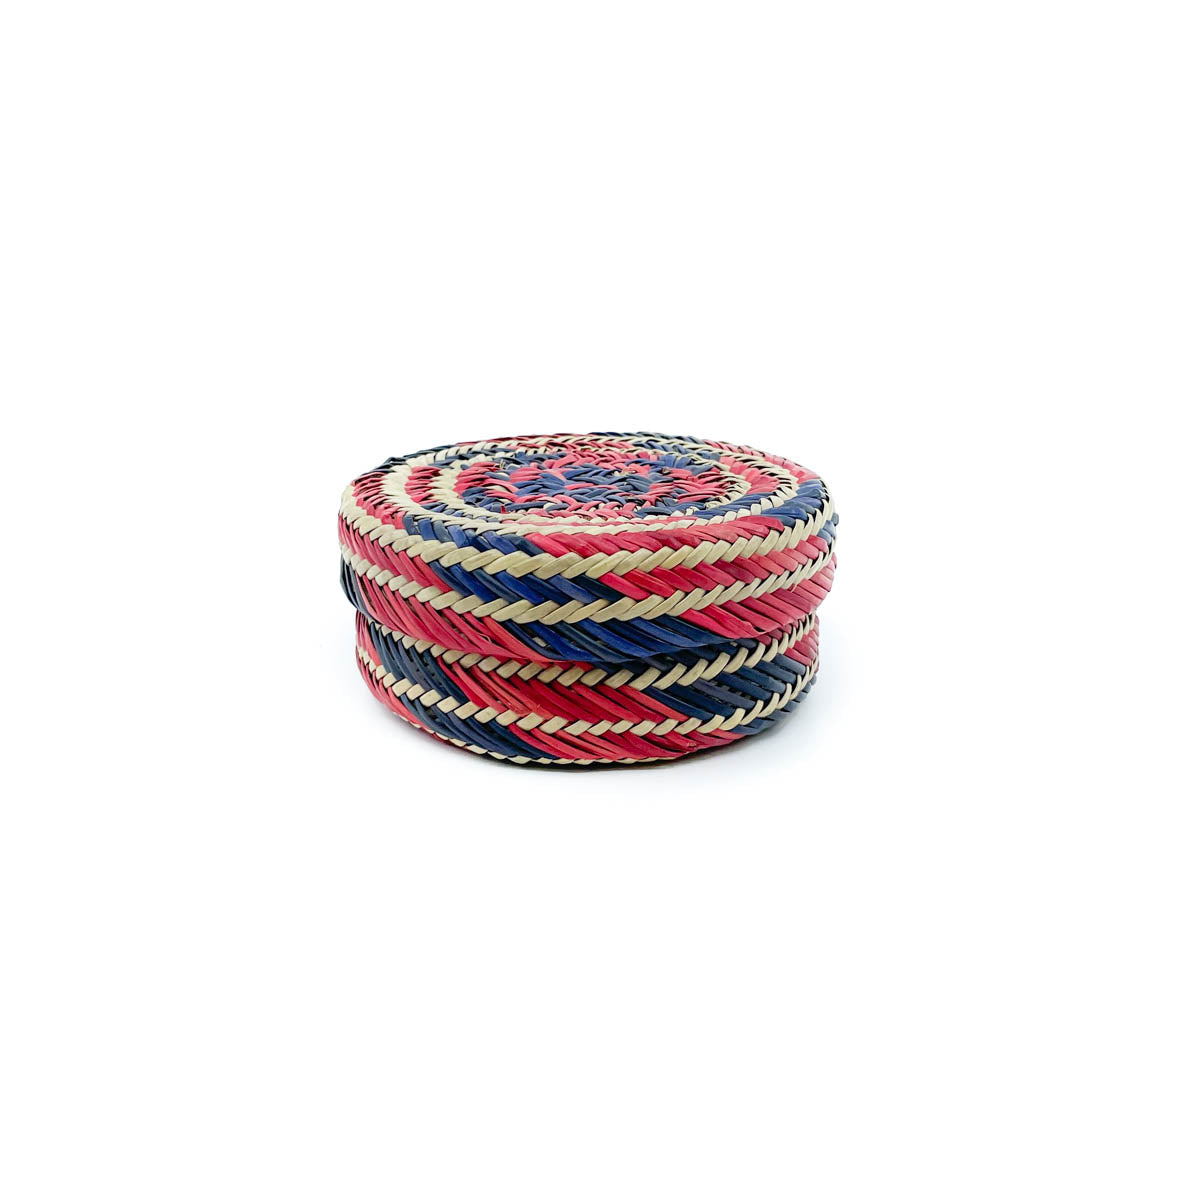 Load image into Gallery viewer, Rarámuri (Tarahumara) Pine Needle Lidded Basket - Small
